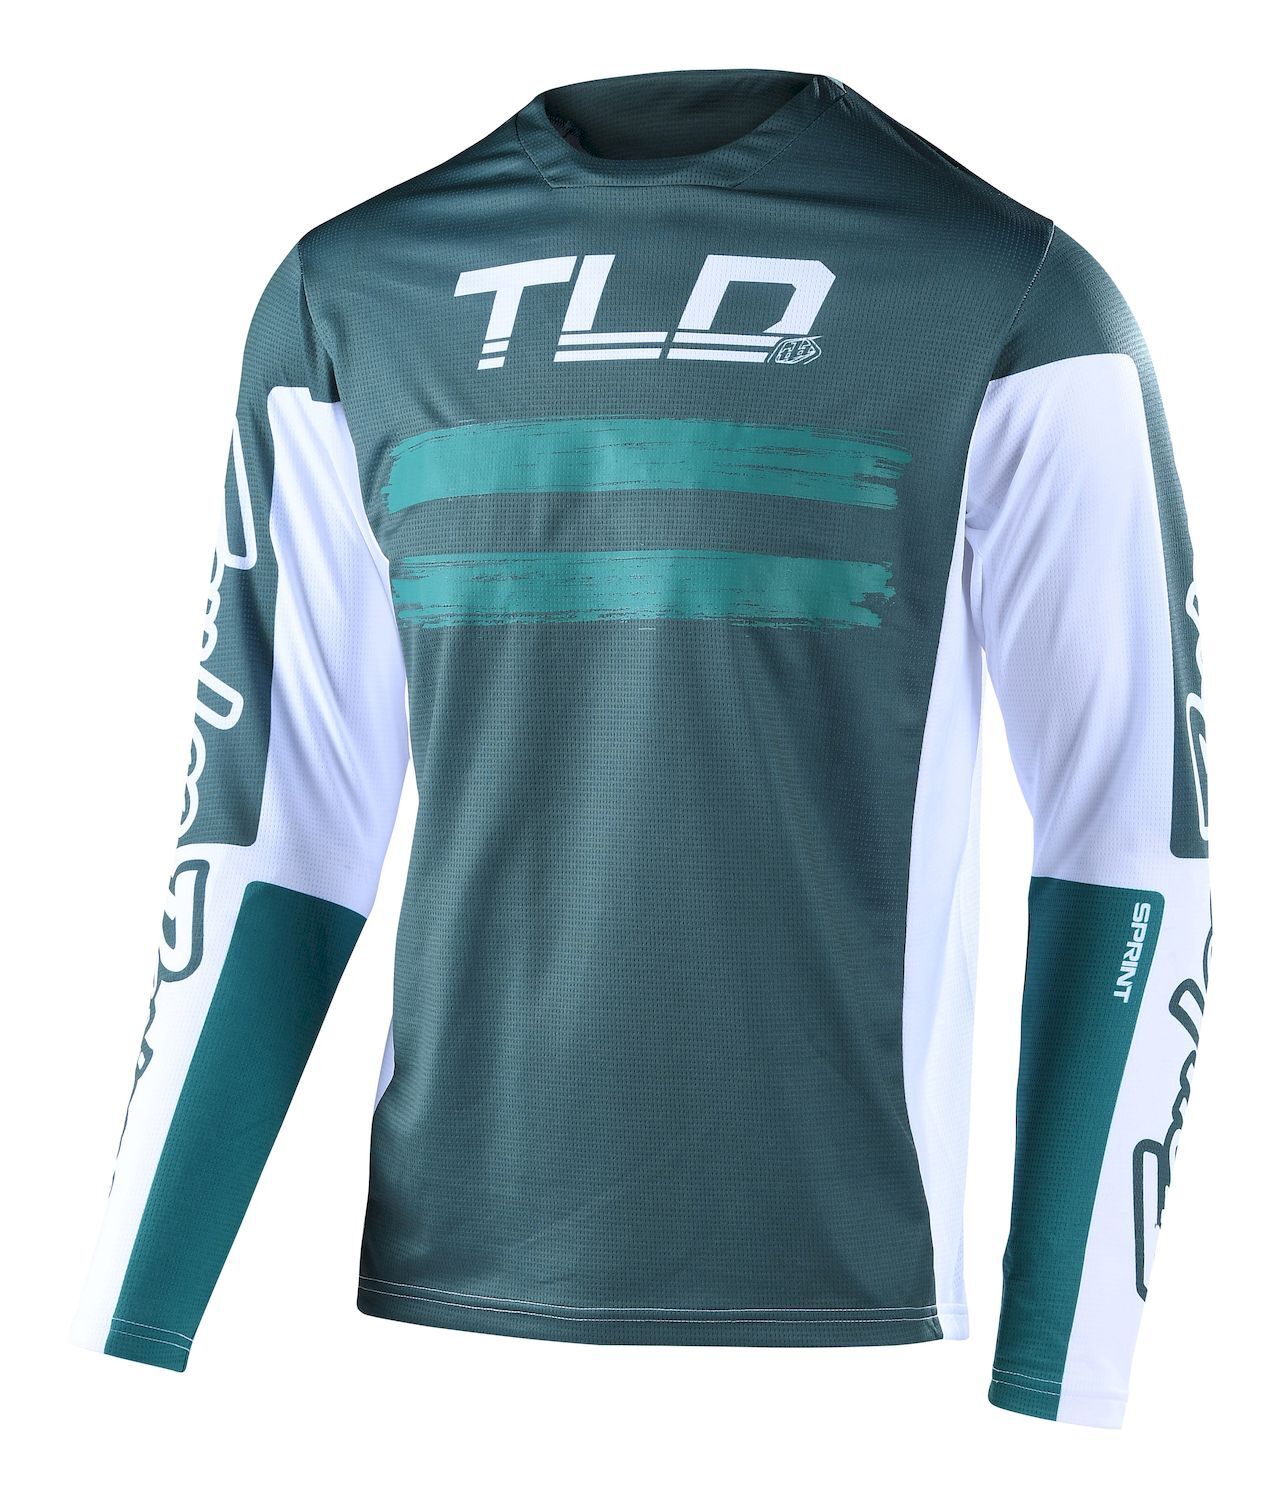 Troy Lee Designs  Sprint Jersey - MTB jersey - Men's